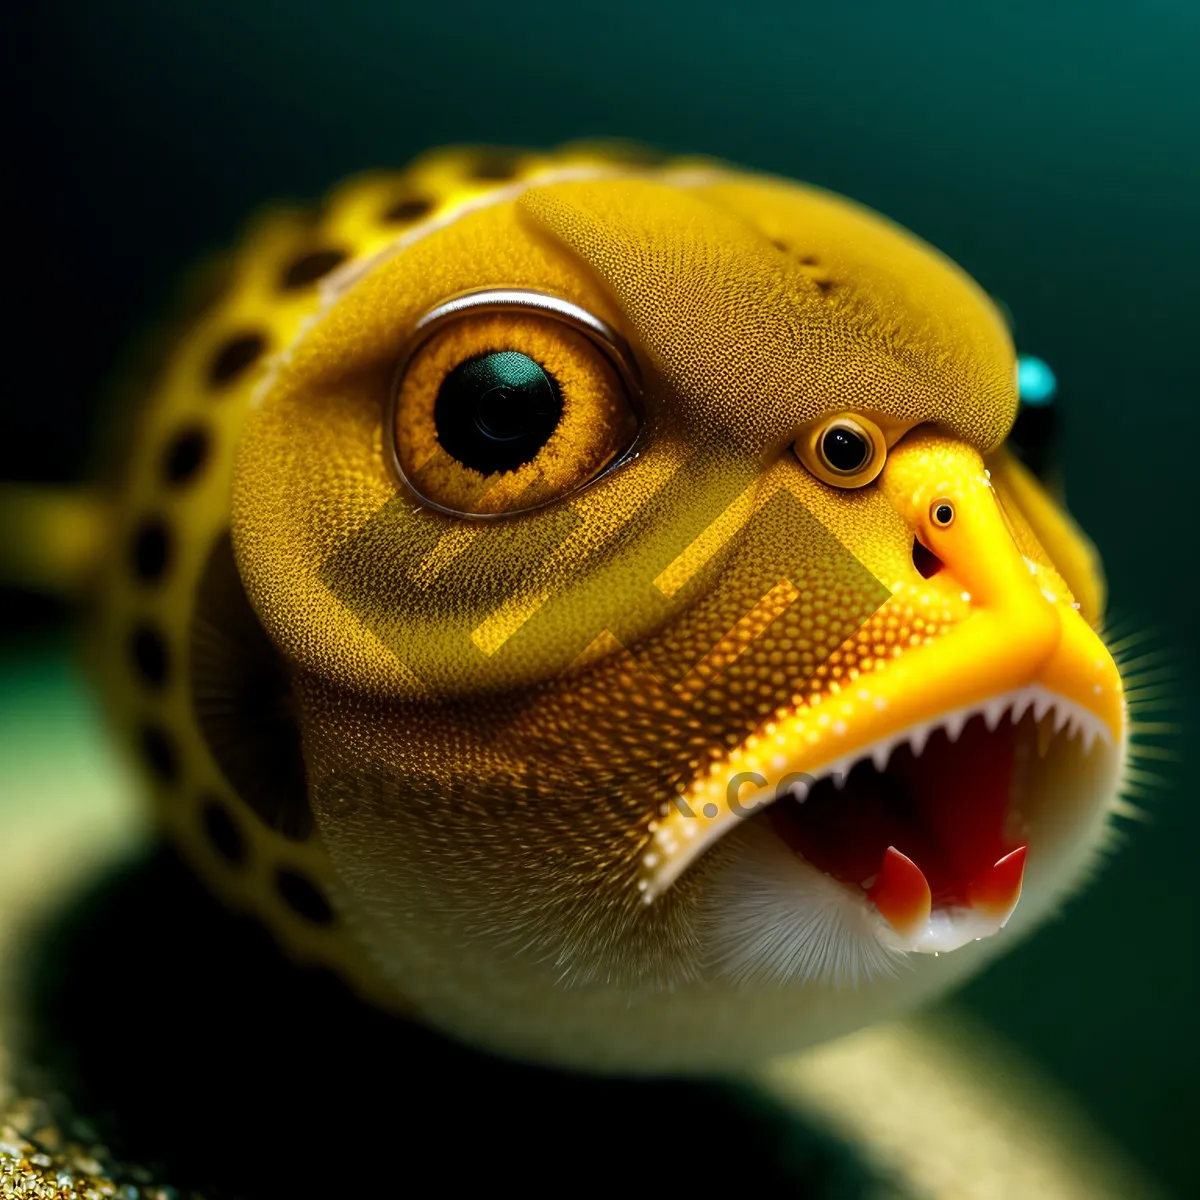 Picture of Child's mesmerizing eye gazes at anemone fish